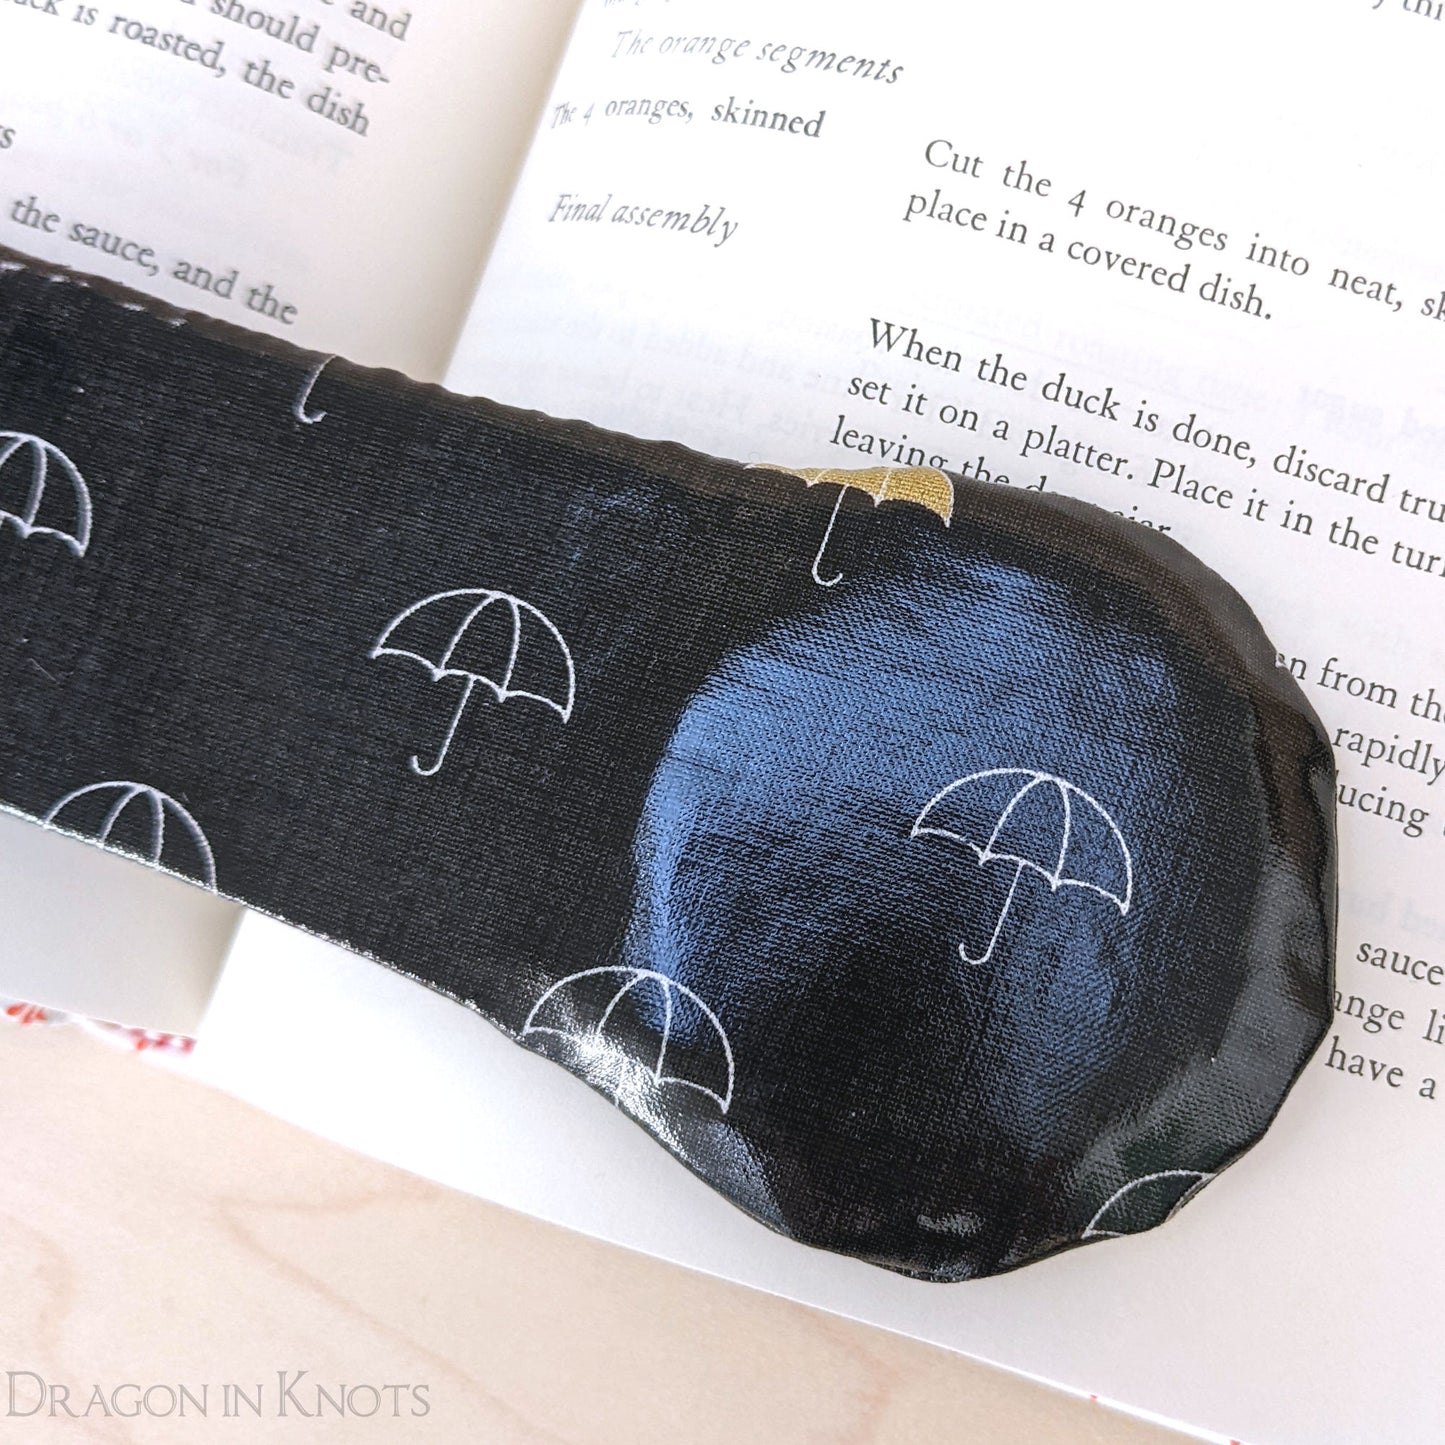 Black Umbrella Cookbook Weight Page Holder - Dragon in Knots